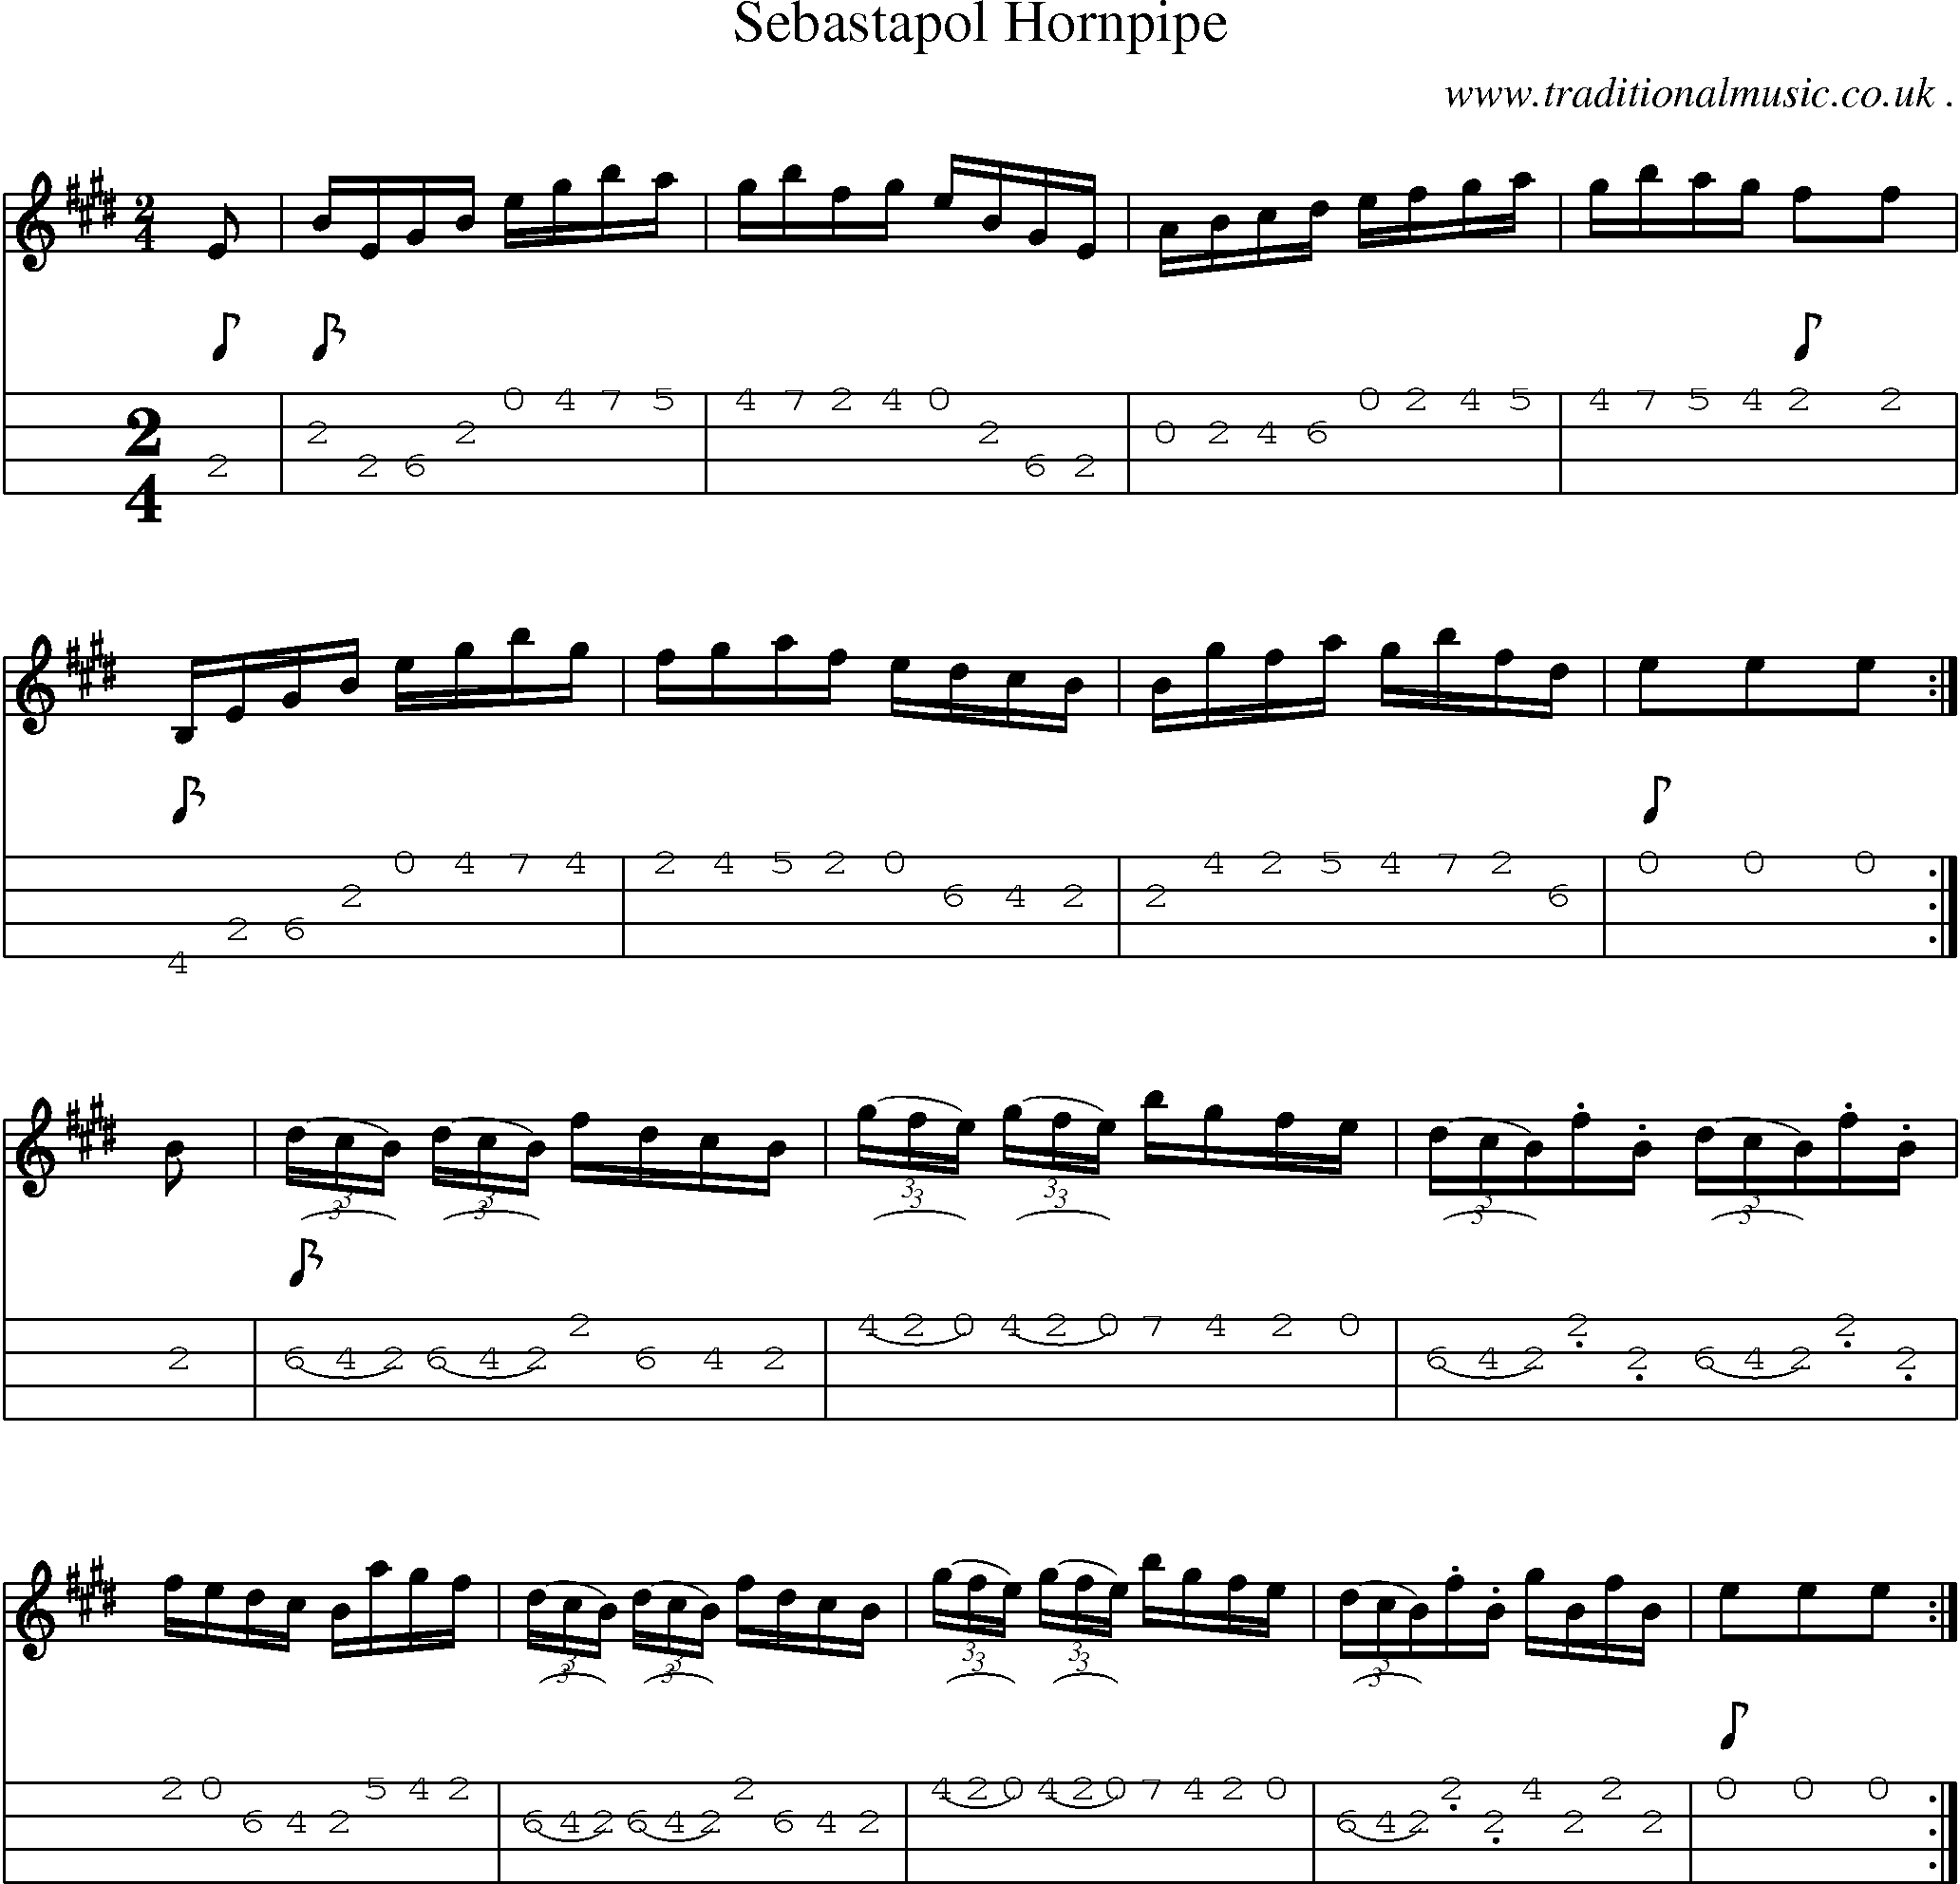 Sheet-Music and Mandolin Tabs for Sebastapol Hornpipe